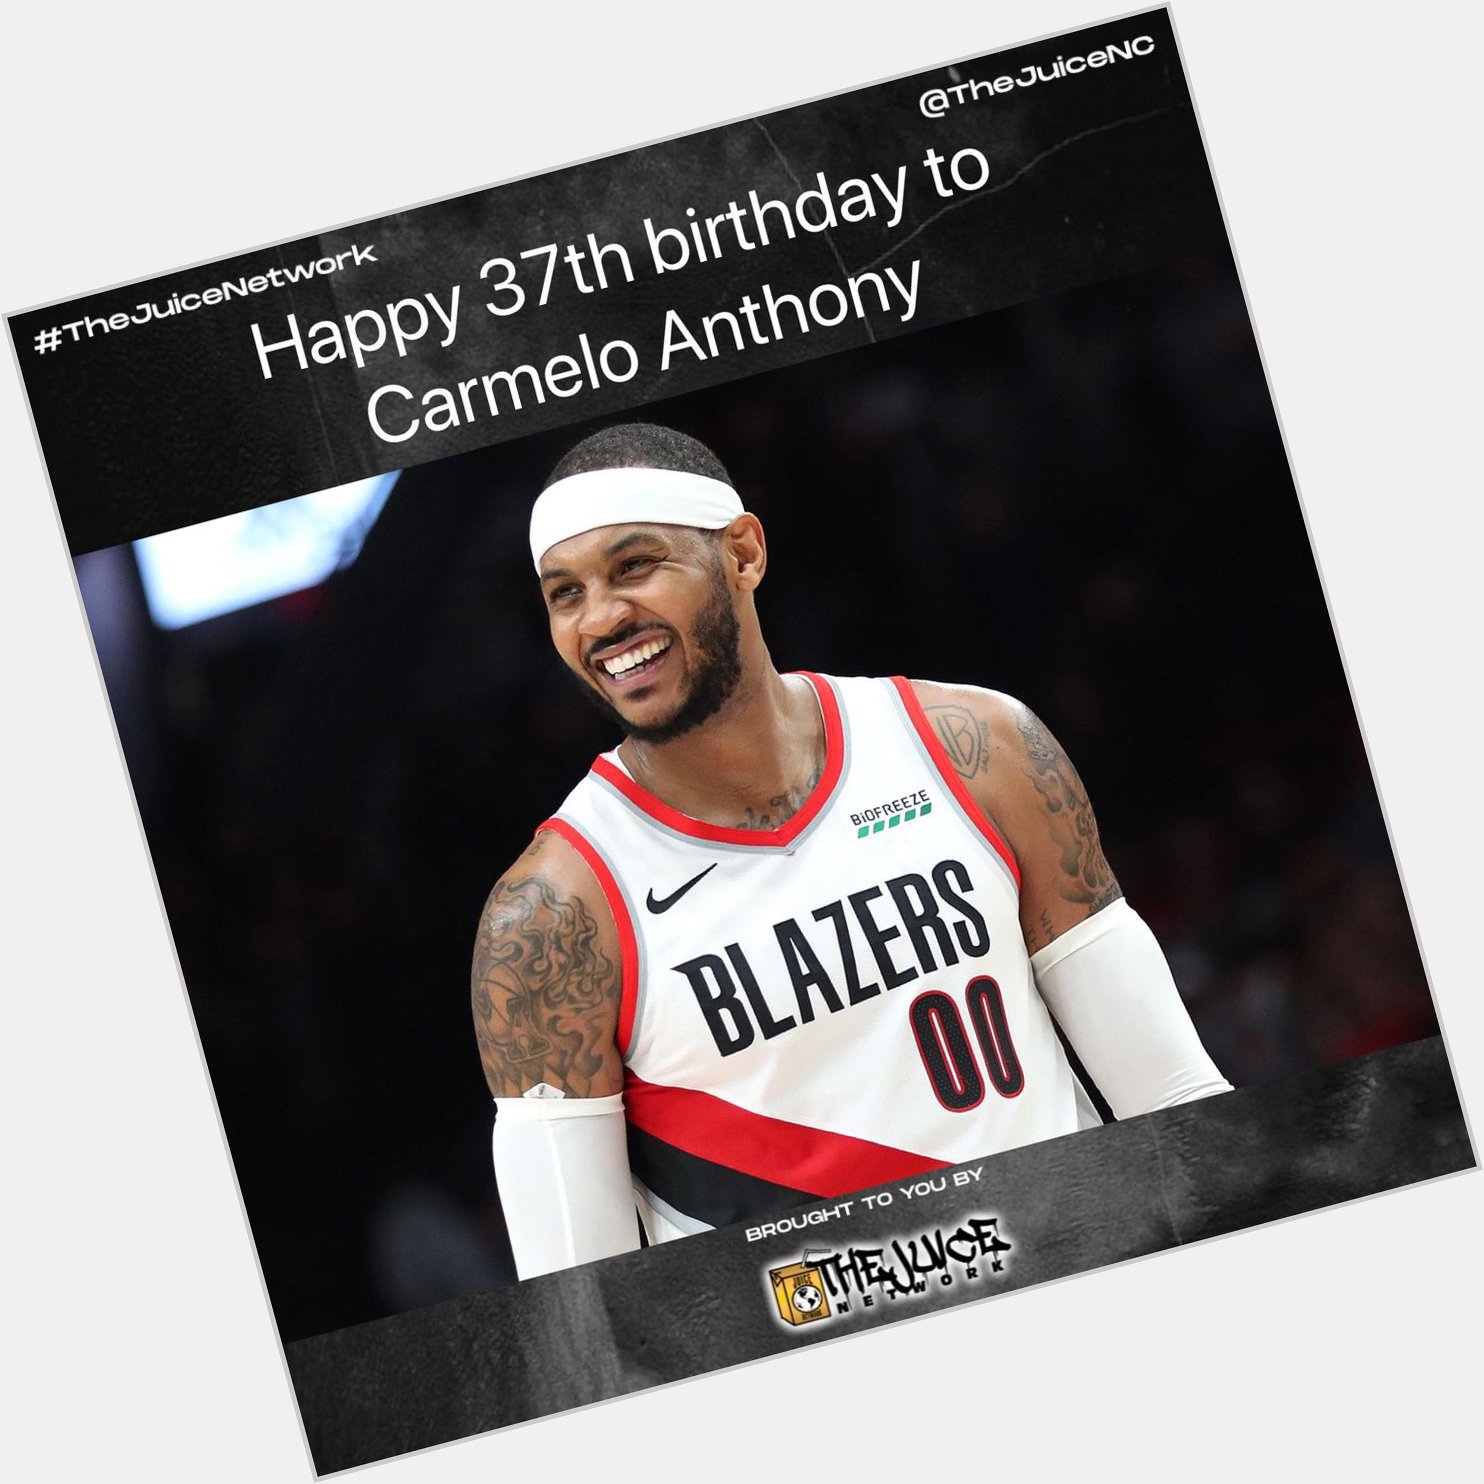 Happy 37th birthday to Carmelo Anthony!    